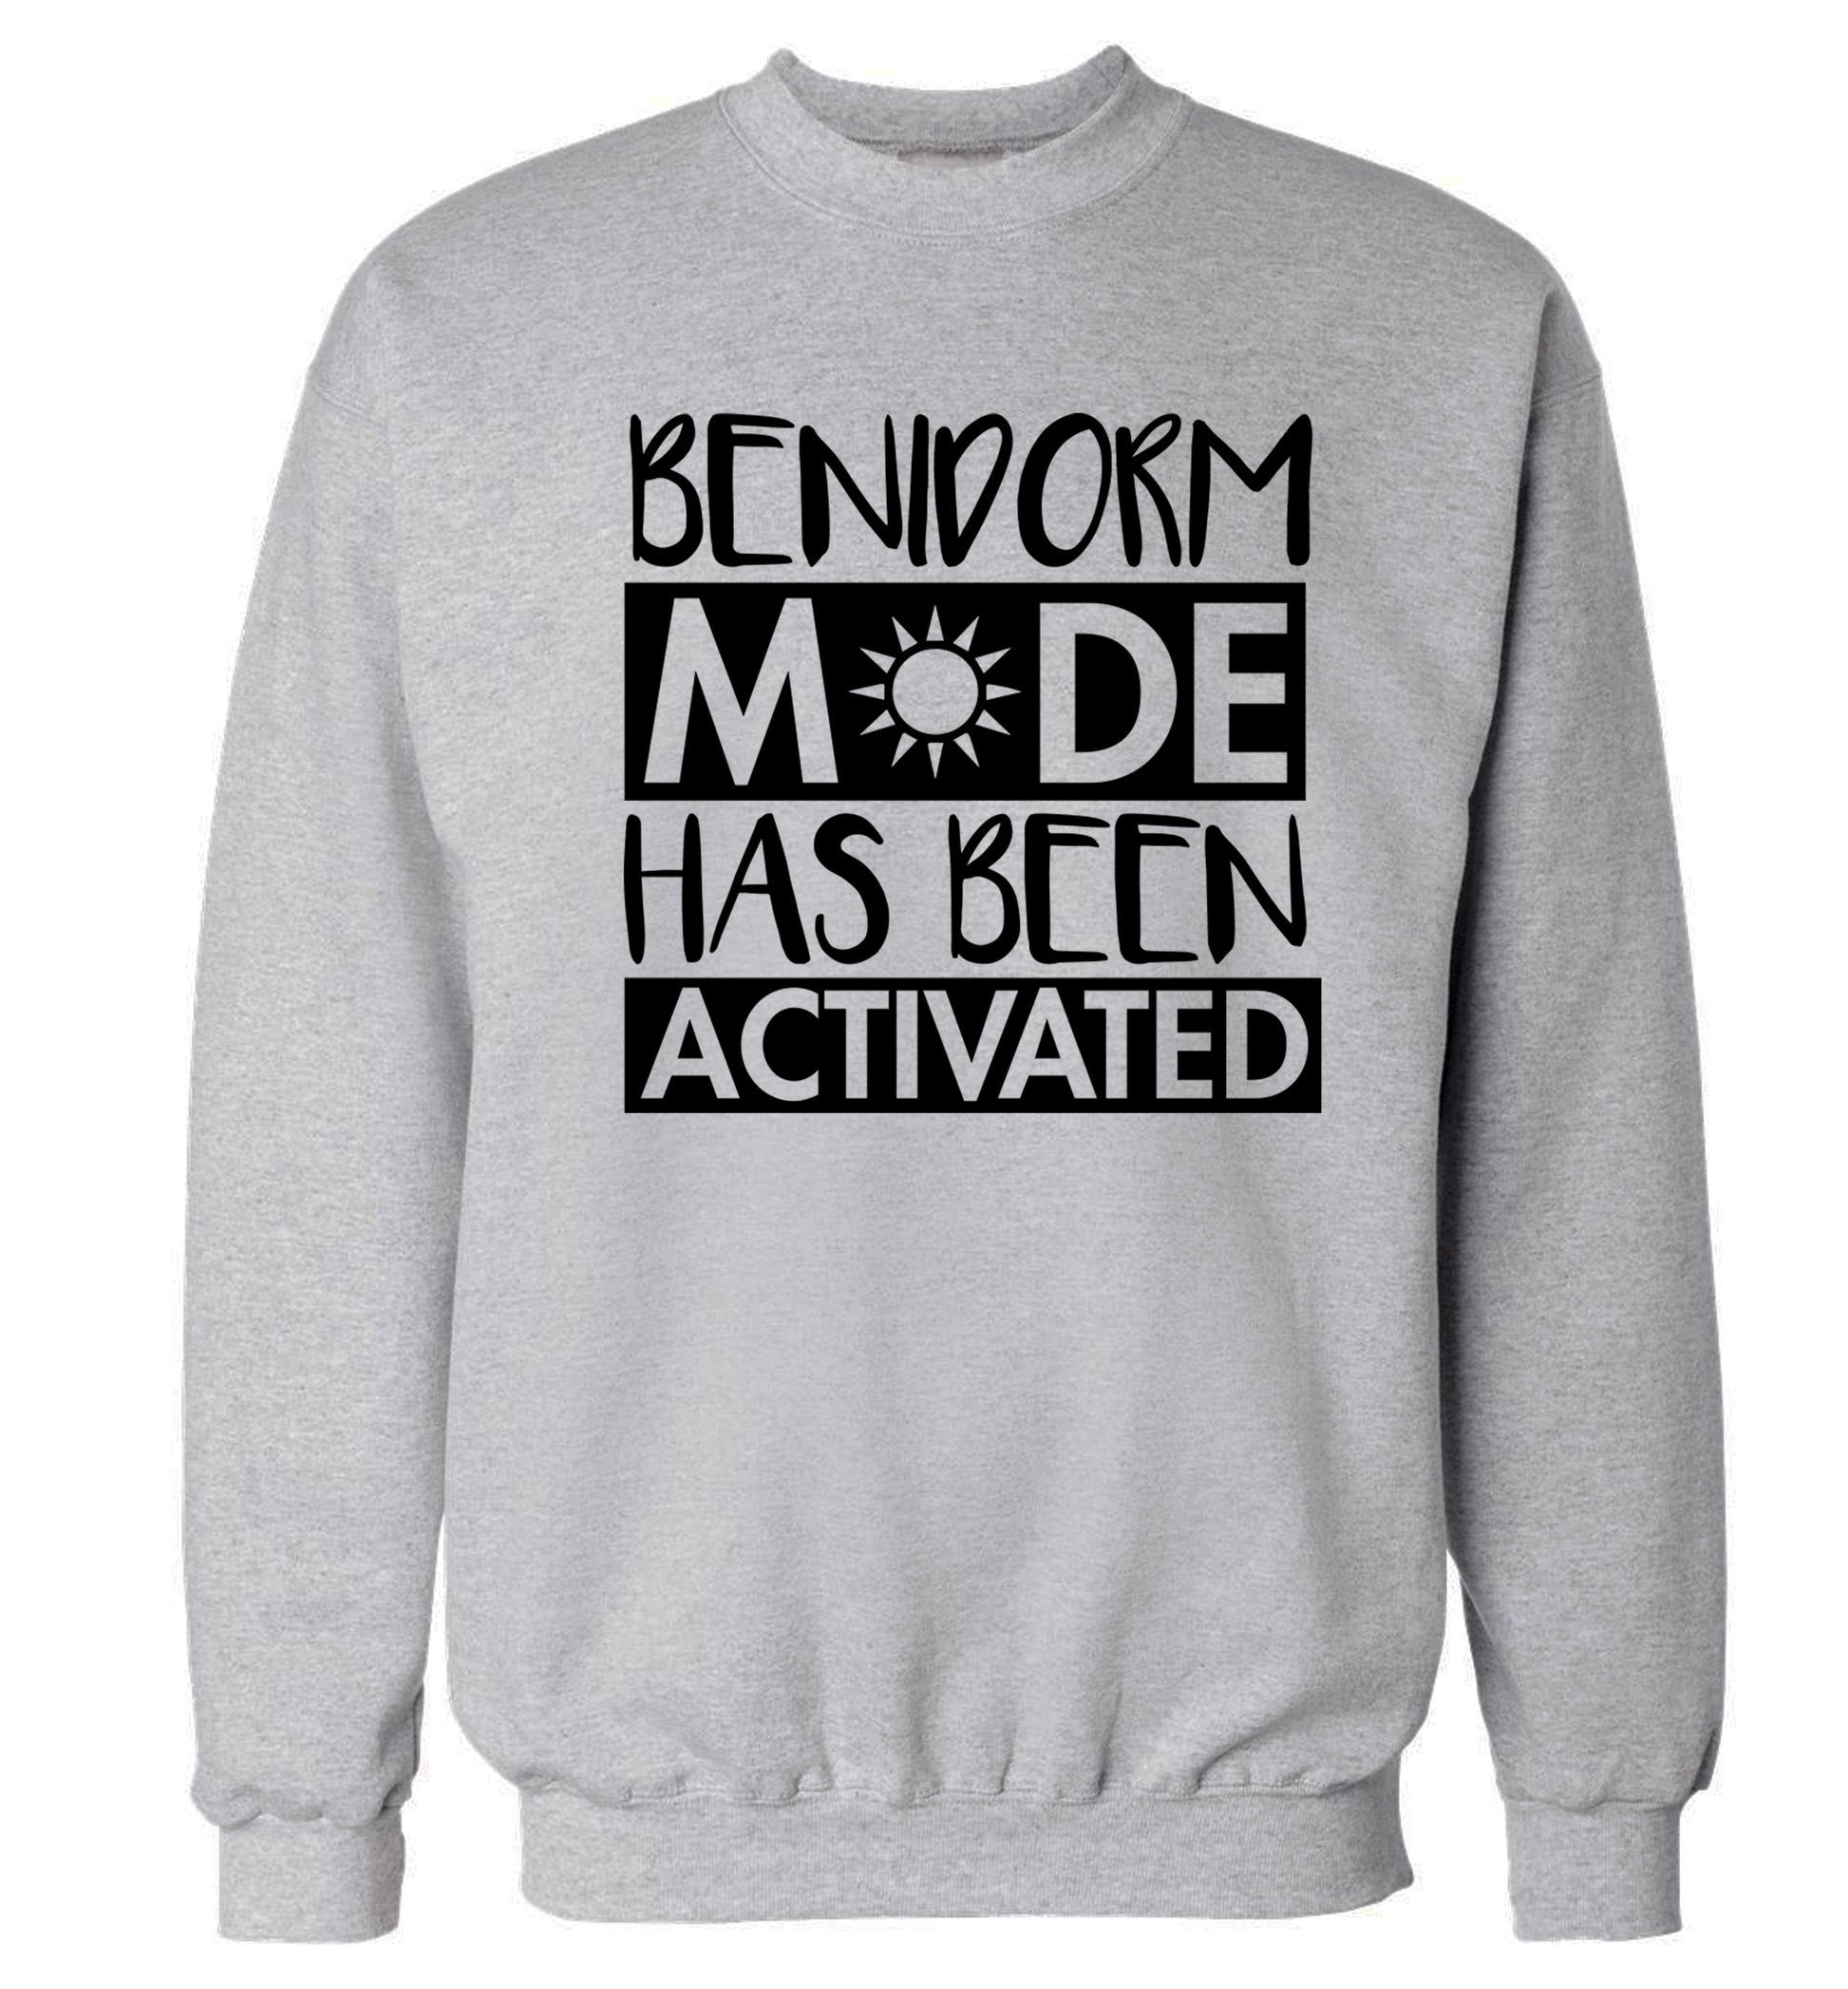 Benidorm mode has been activated Adult's unisex grey Sweater 2XL